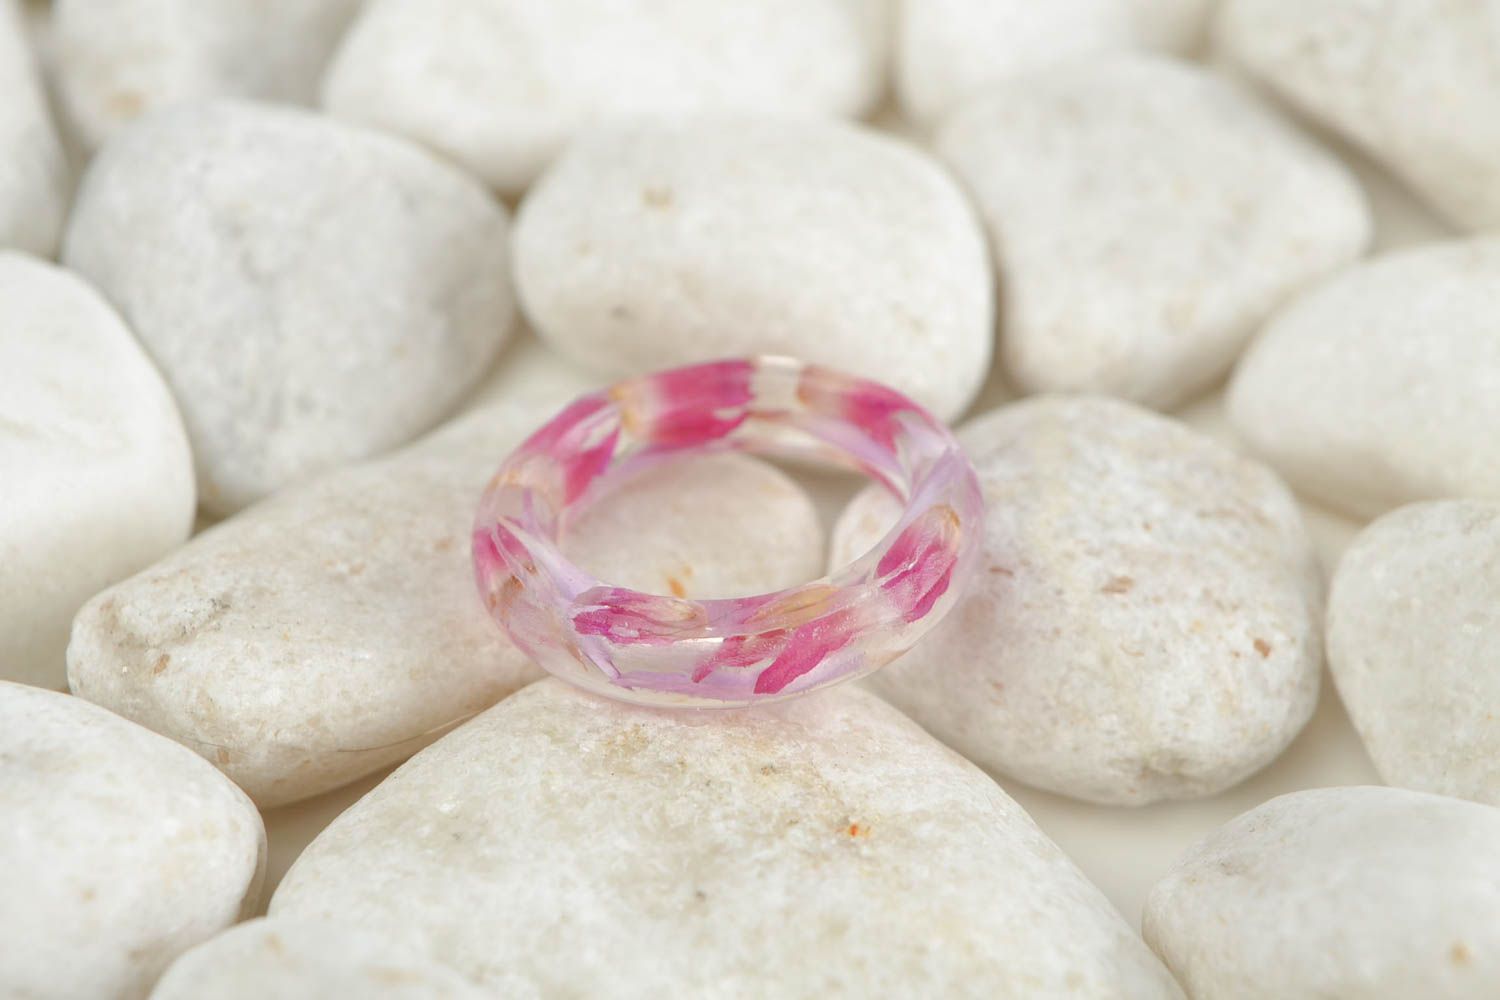 Handmade ring designer accessory gift ideas unusual gift for women epoxy ring photo 1